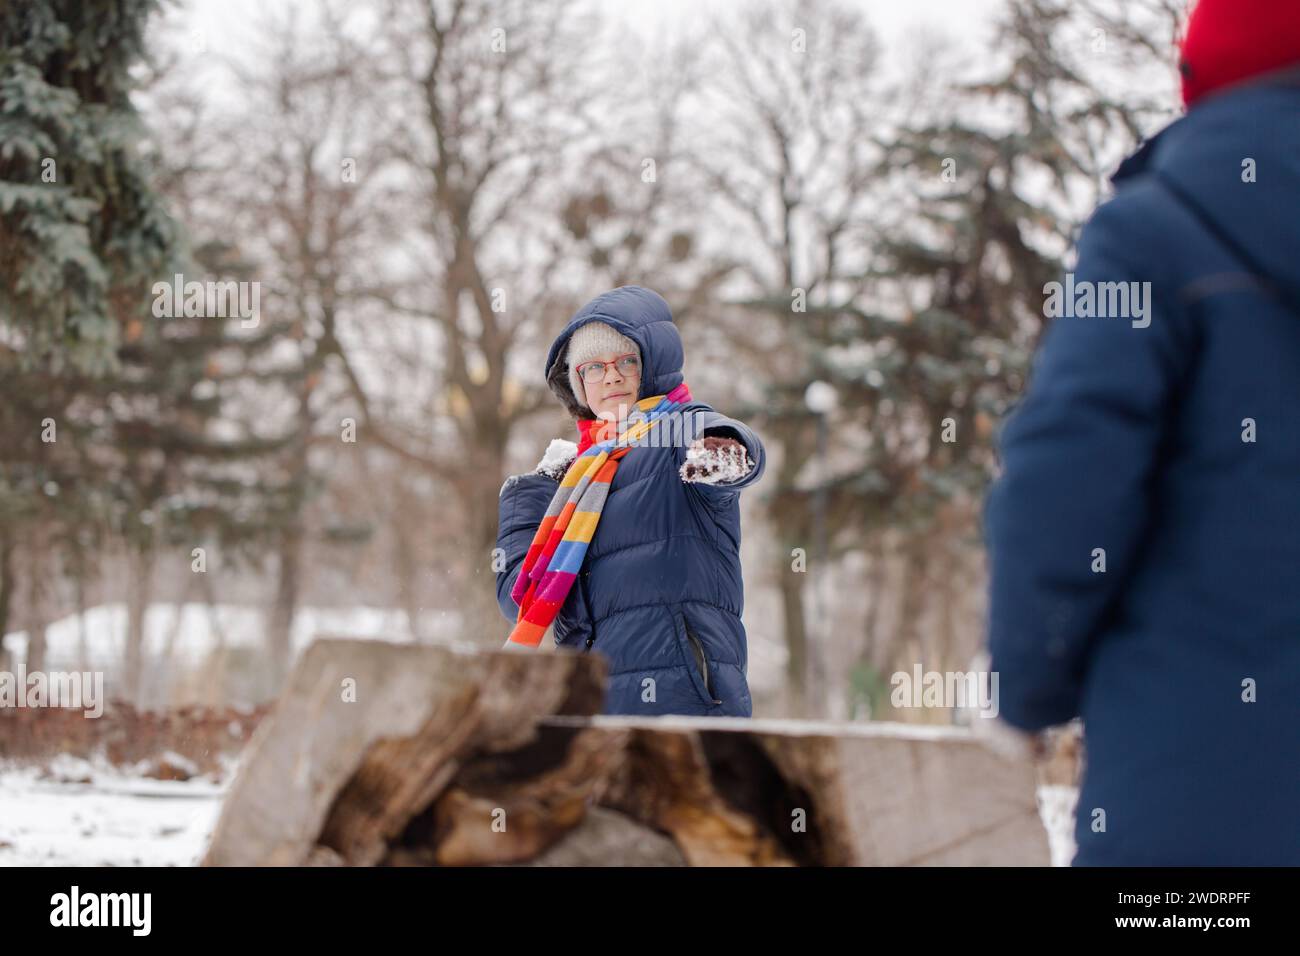 Children throw snowballs in the park Stock Photo